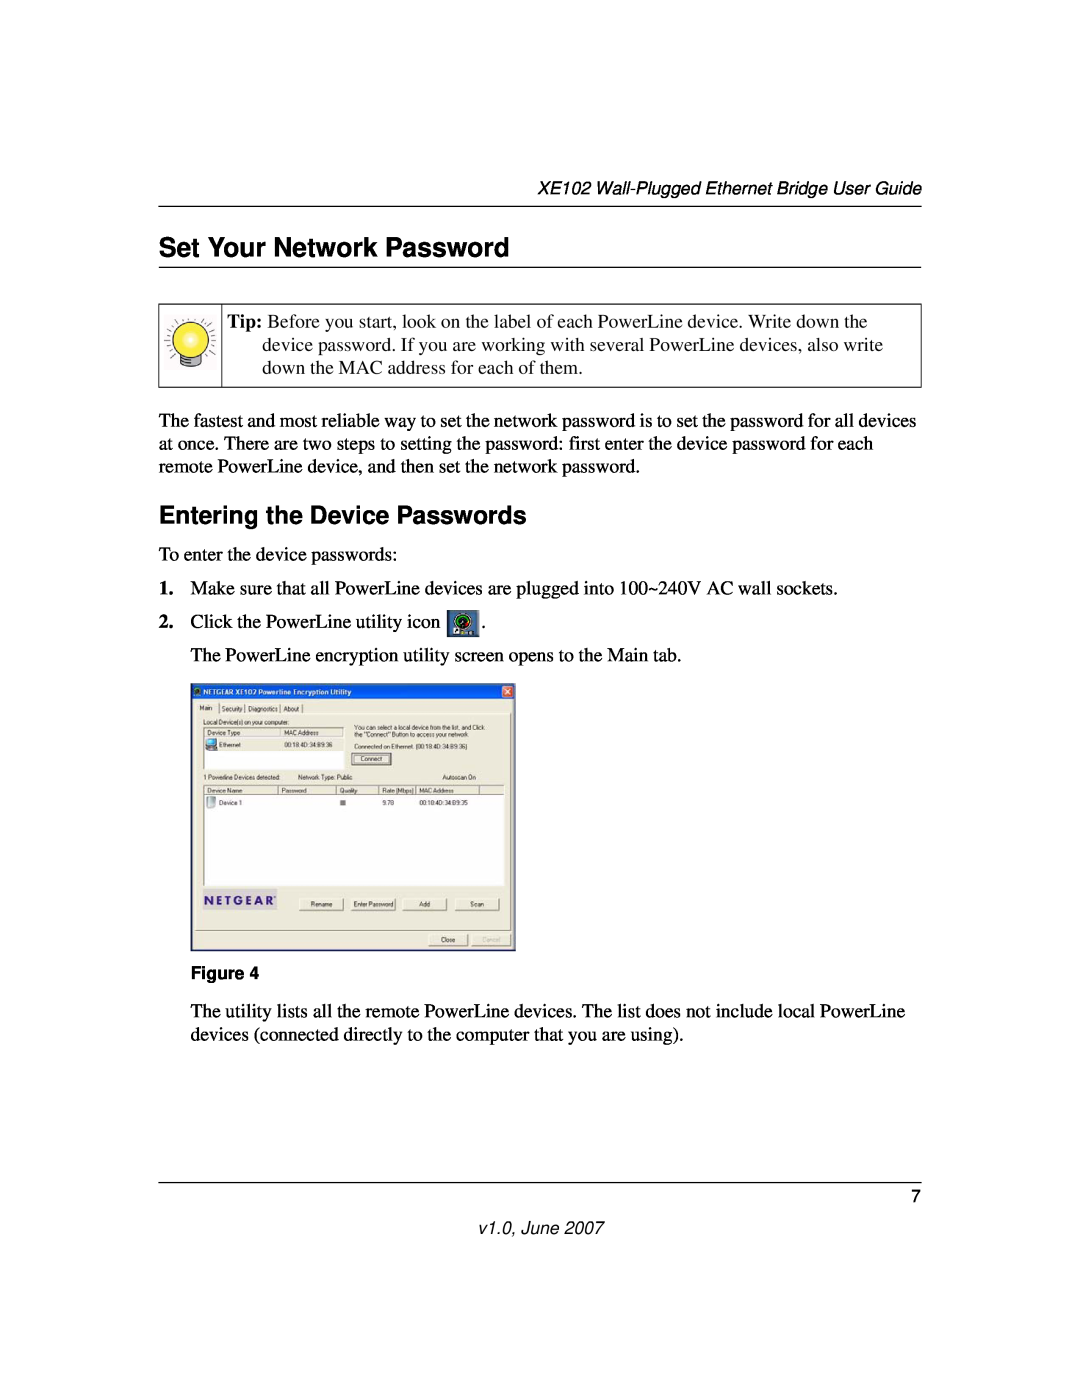 NETGEAR XE102 manual Set Your Network Password, Entering the Device Passwords 